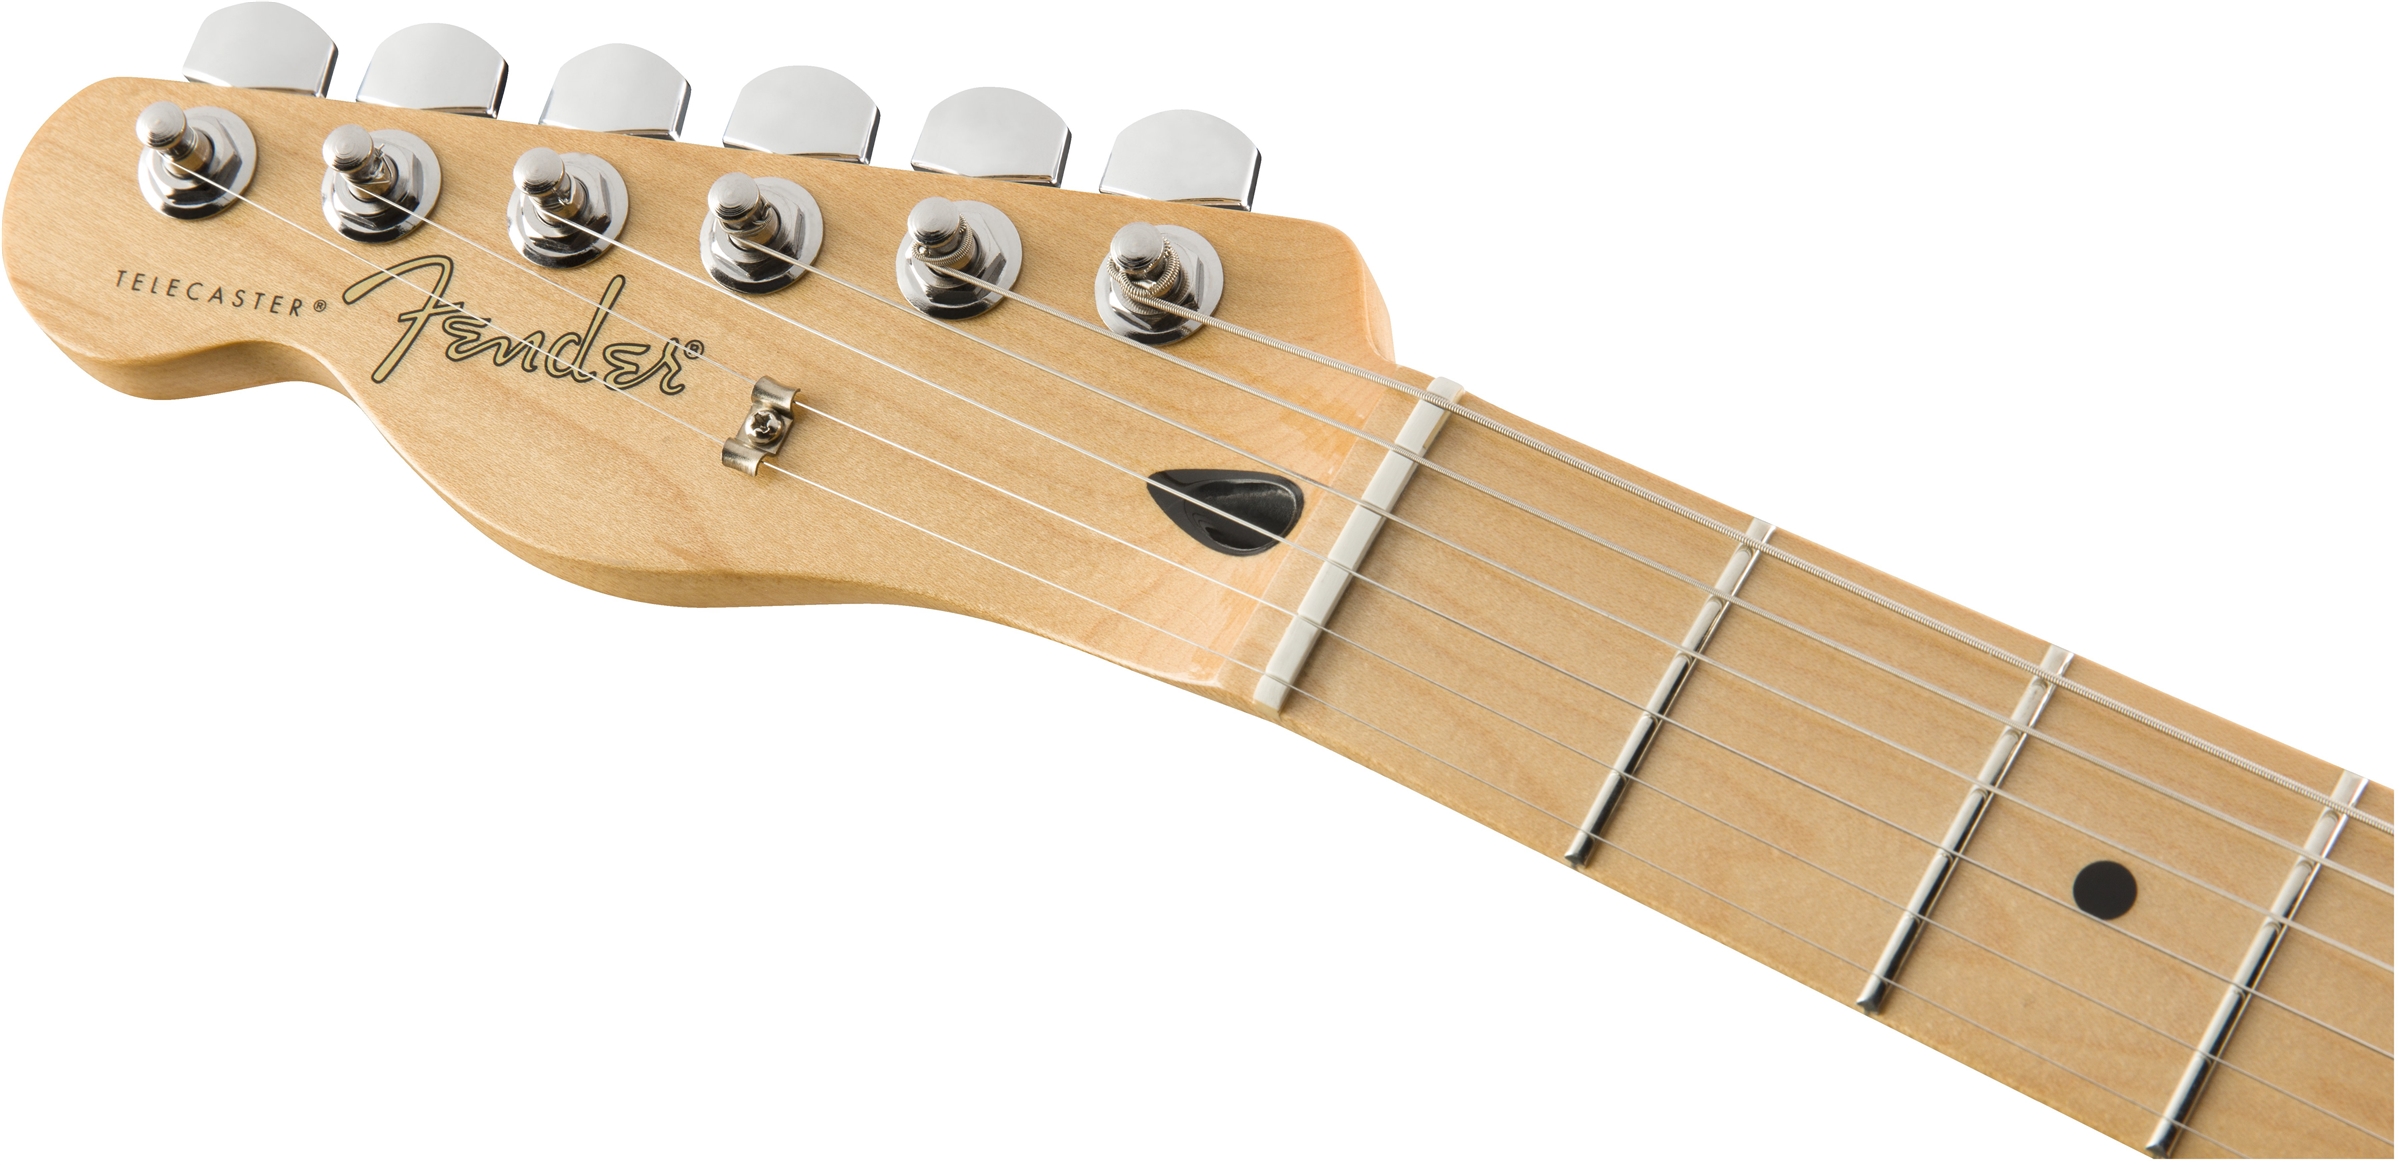 Fender Tele Player Lh Gaucher Mex 2s Mn - Butterscotch Blonde - Left-handed electric guitar - Variation 4